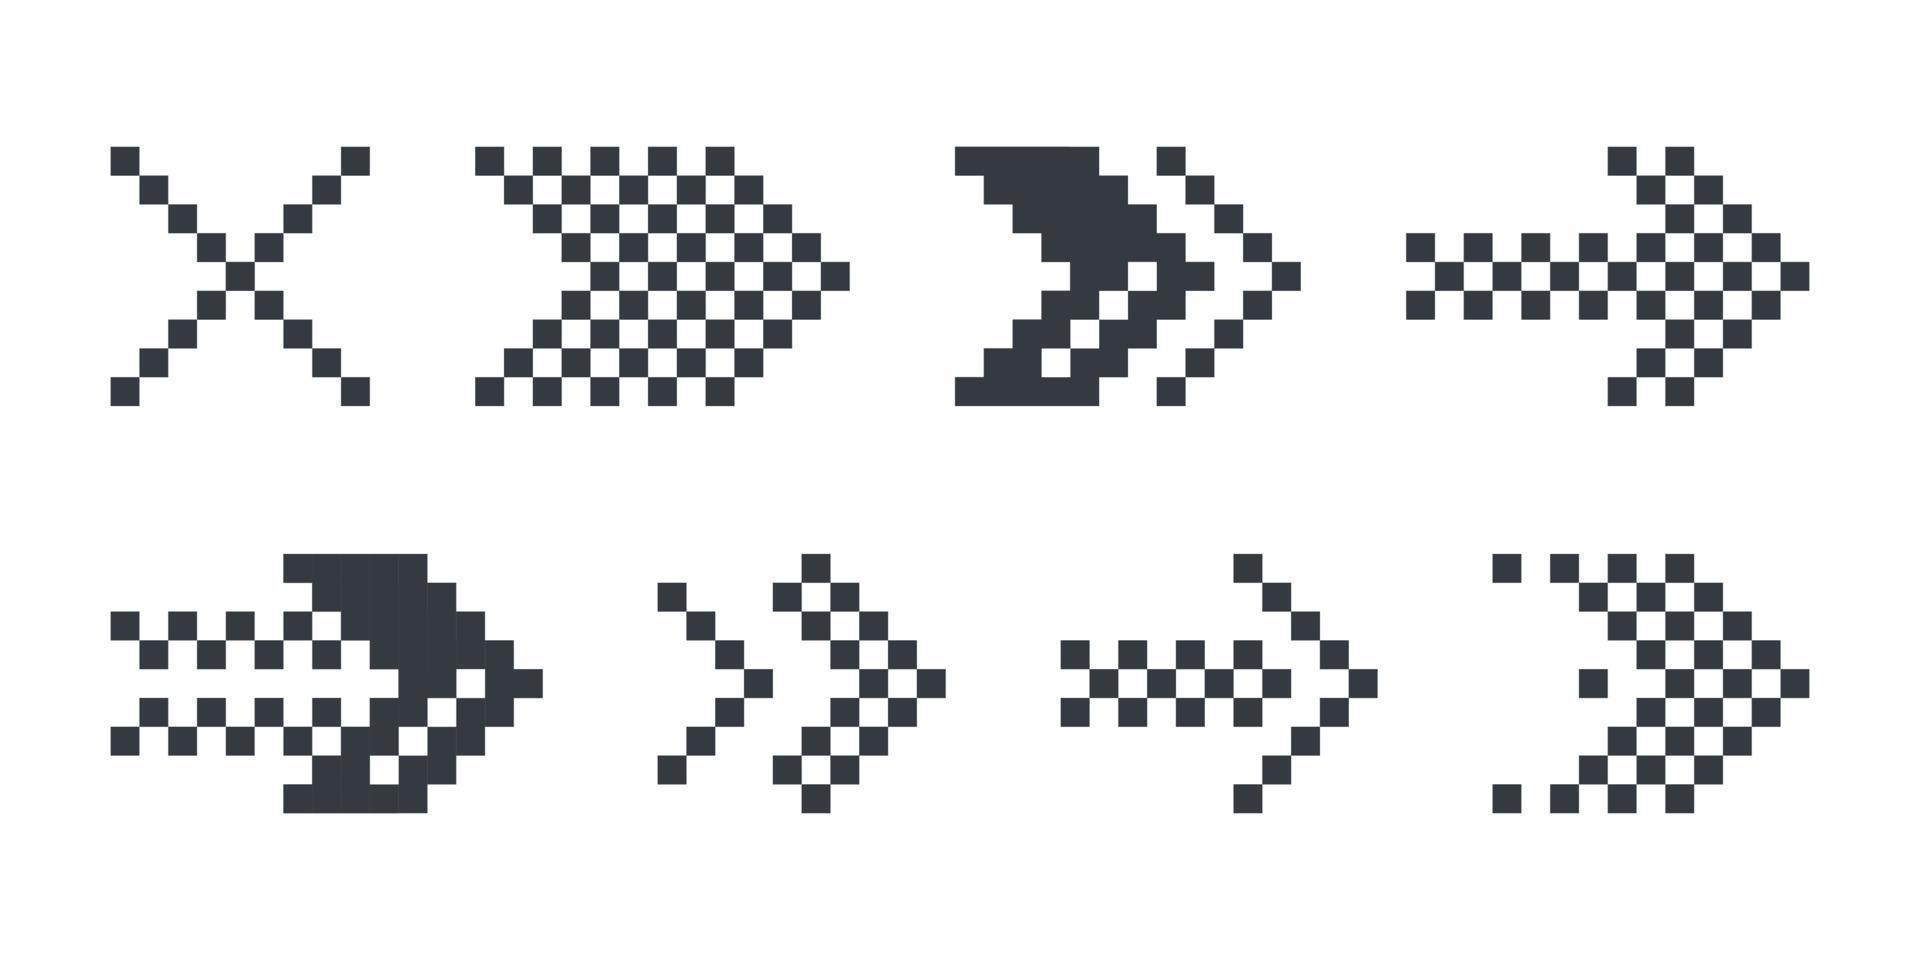 flechas de píxeles arte de píxeles de flechas. concepto de iconos de flechas. dirección de las flechas. ilustración vectorial vector